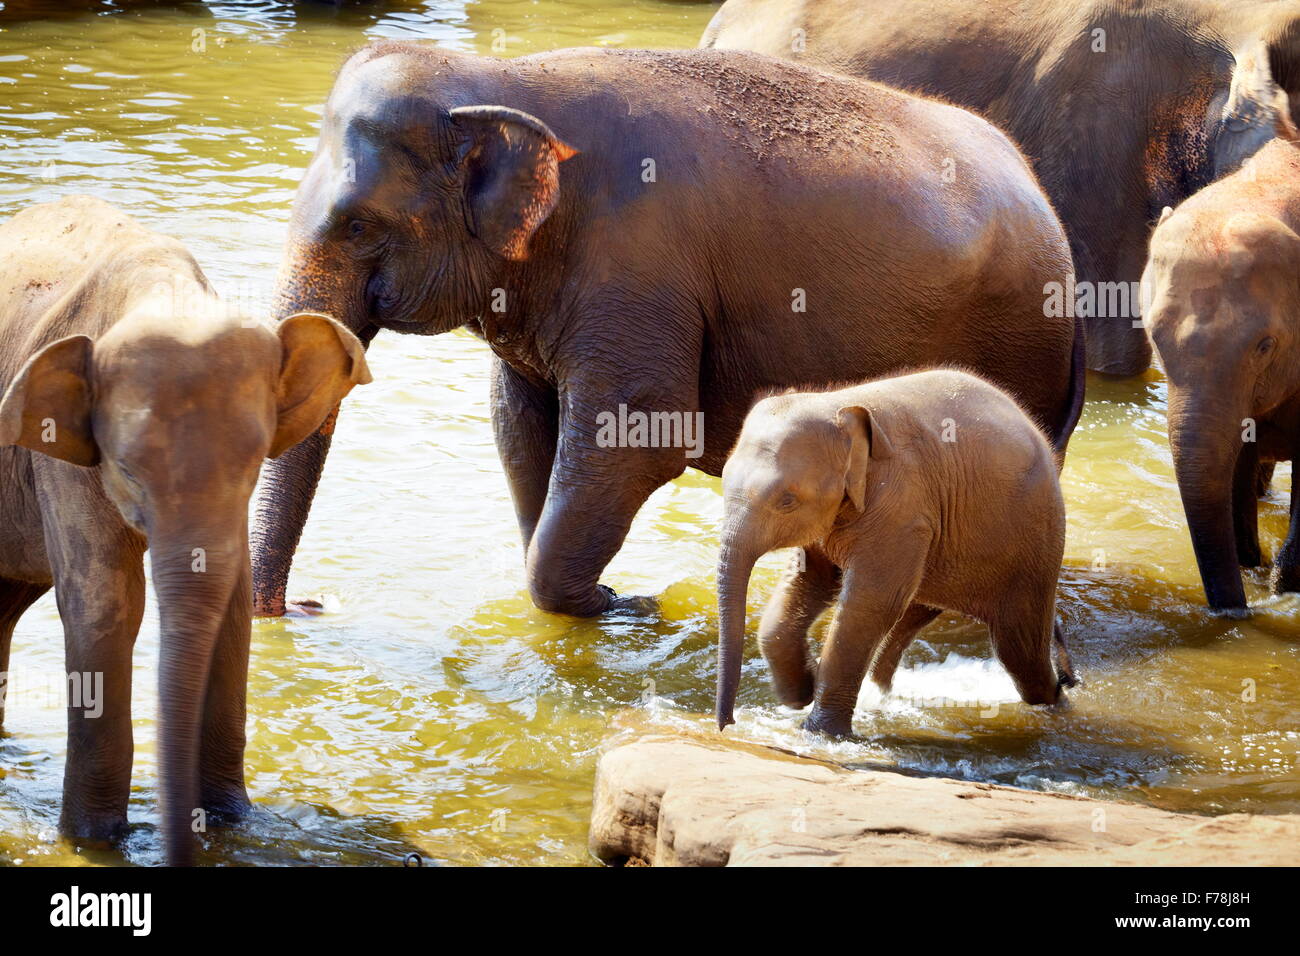 Sri Lanka - elephants in the bath - Pinnawela Elephant Orphanage for wild Asian elephants Stock Photo